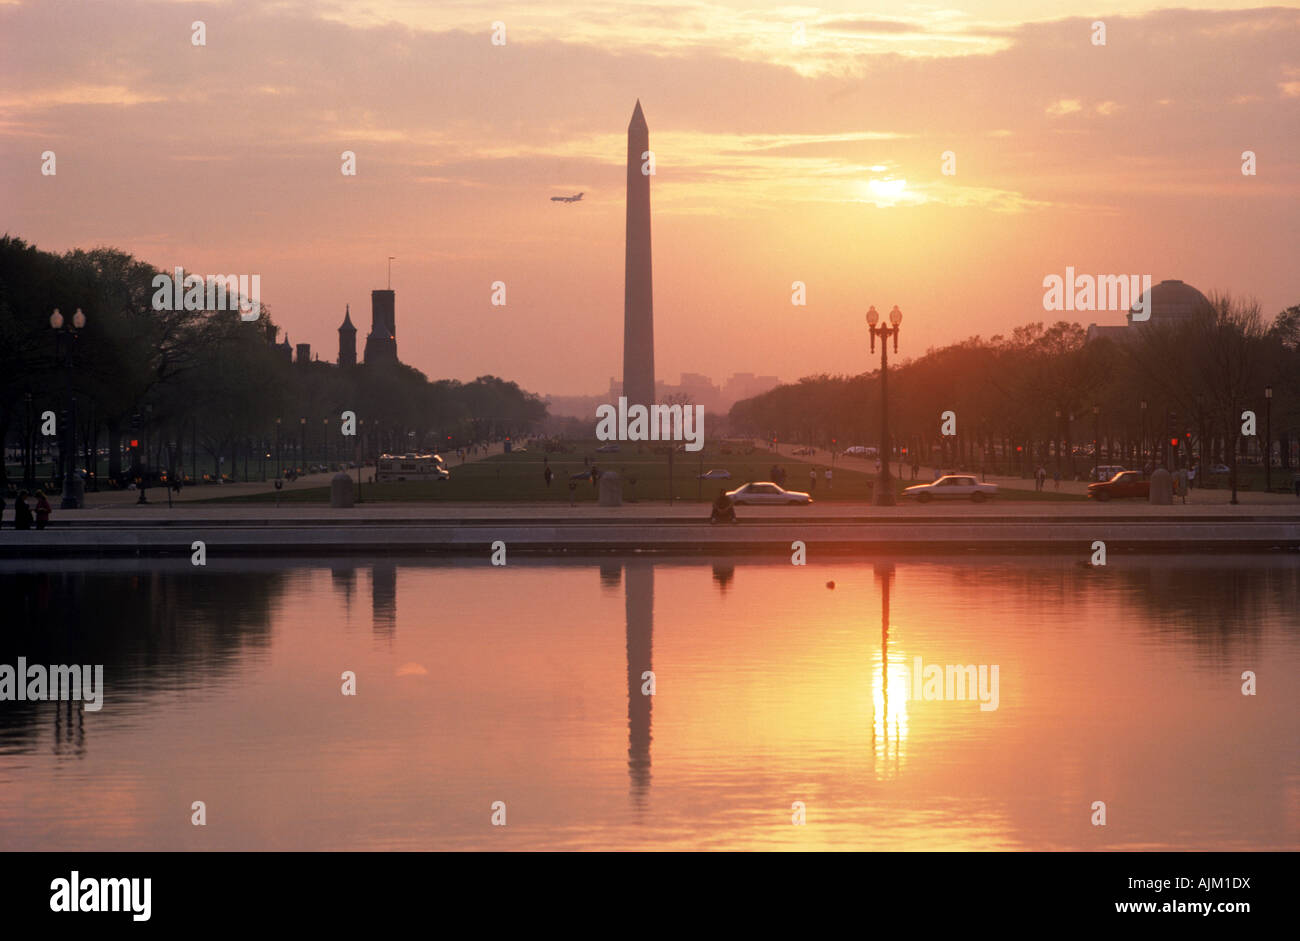 Flugzeug vorbei Washington Monument bei Sonnenaufgang in Washington, D.C. Stockfoto